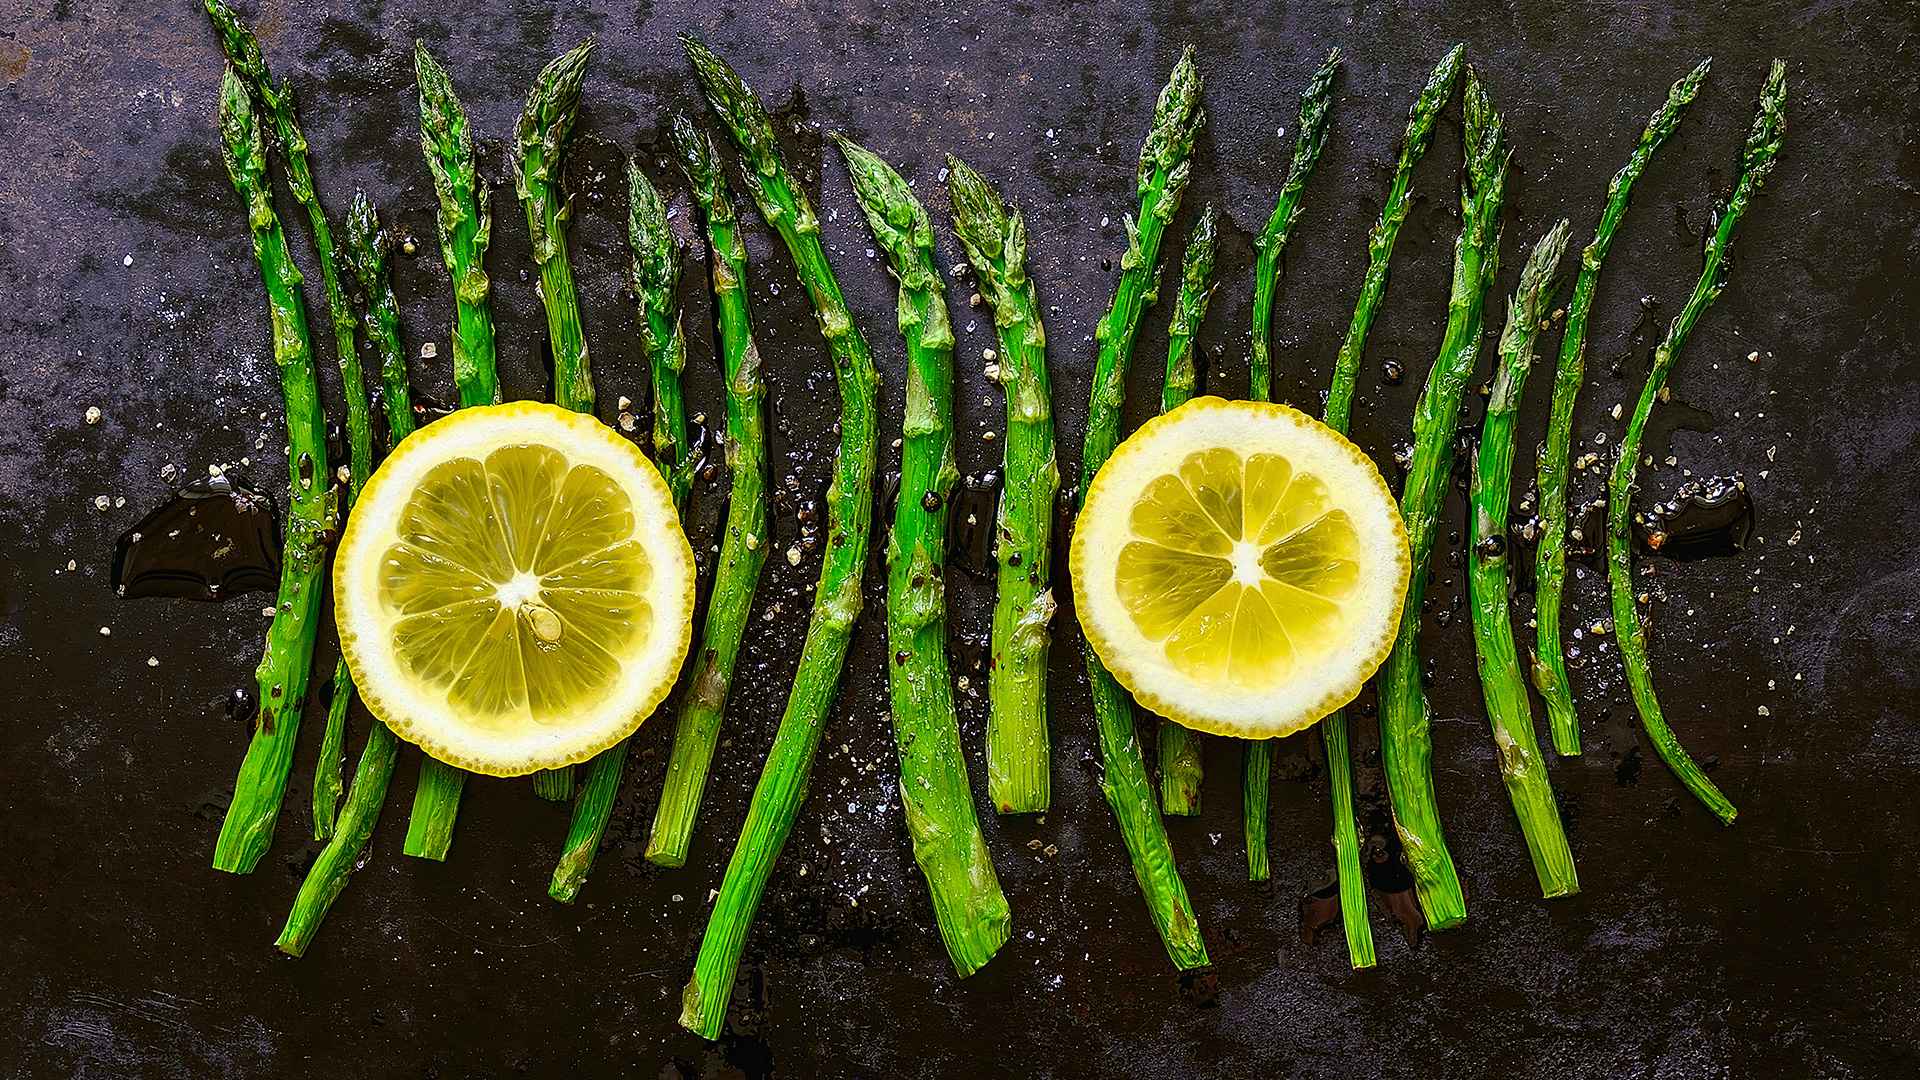 Green asparagus – The correct preparation